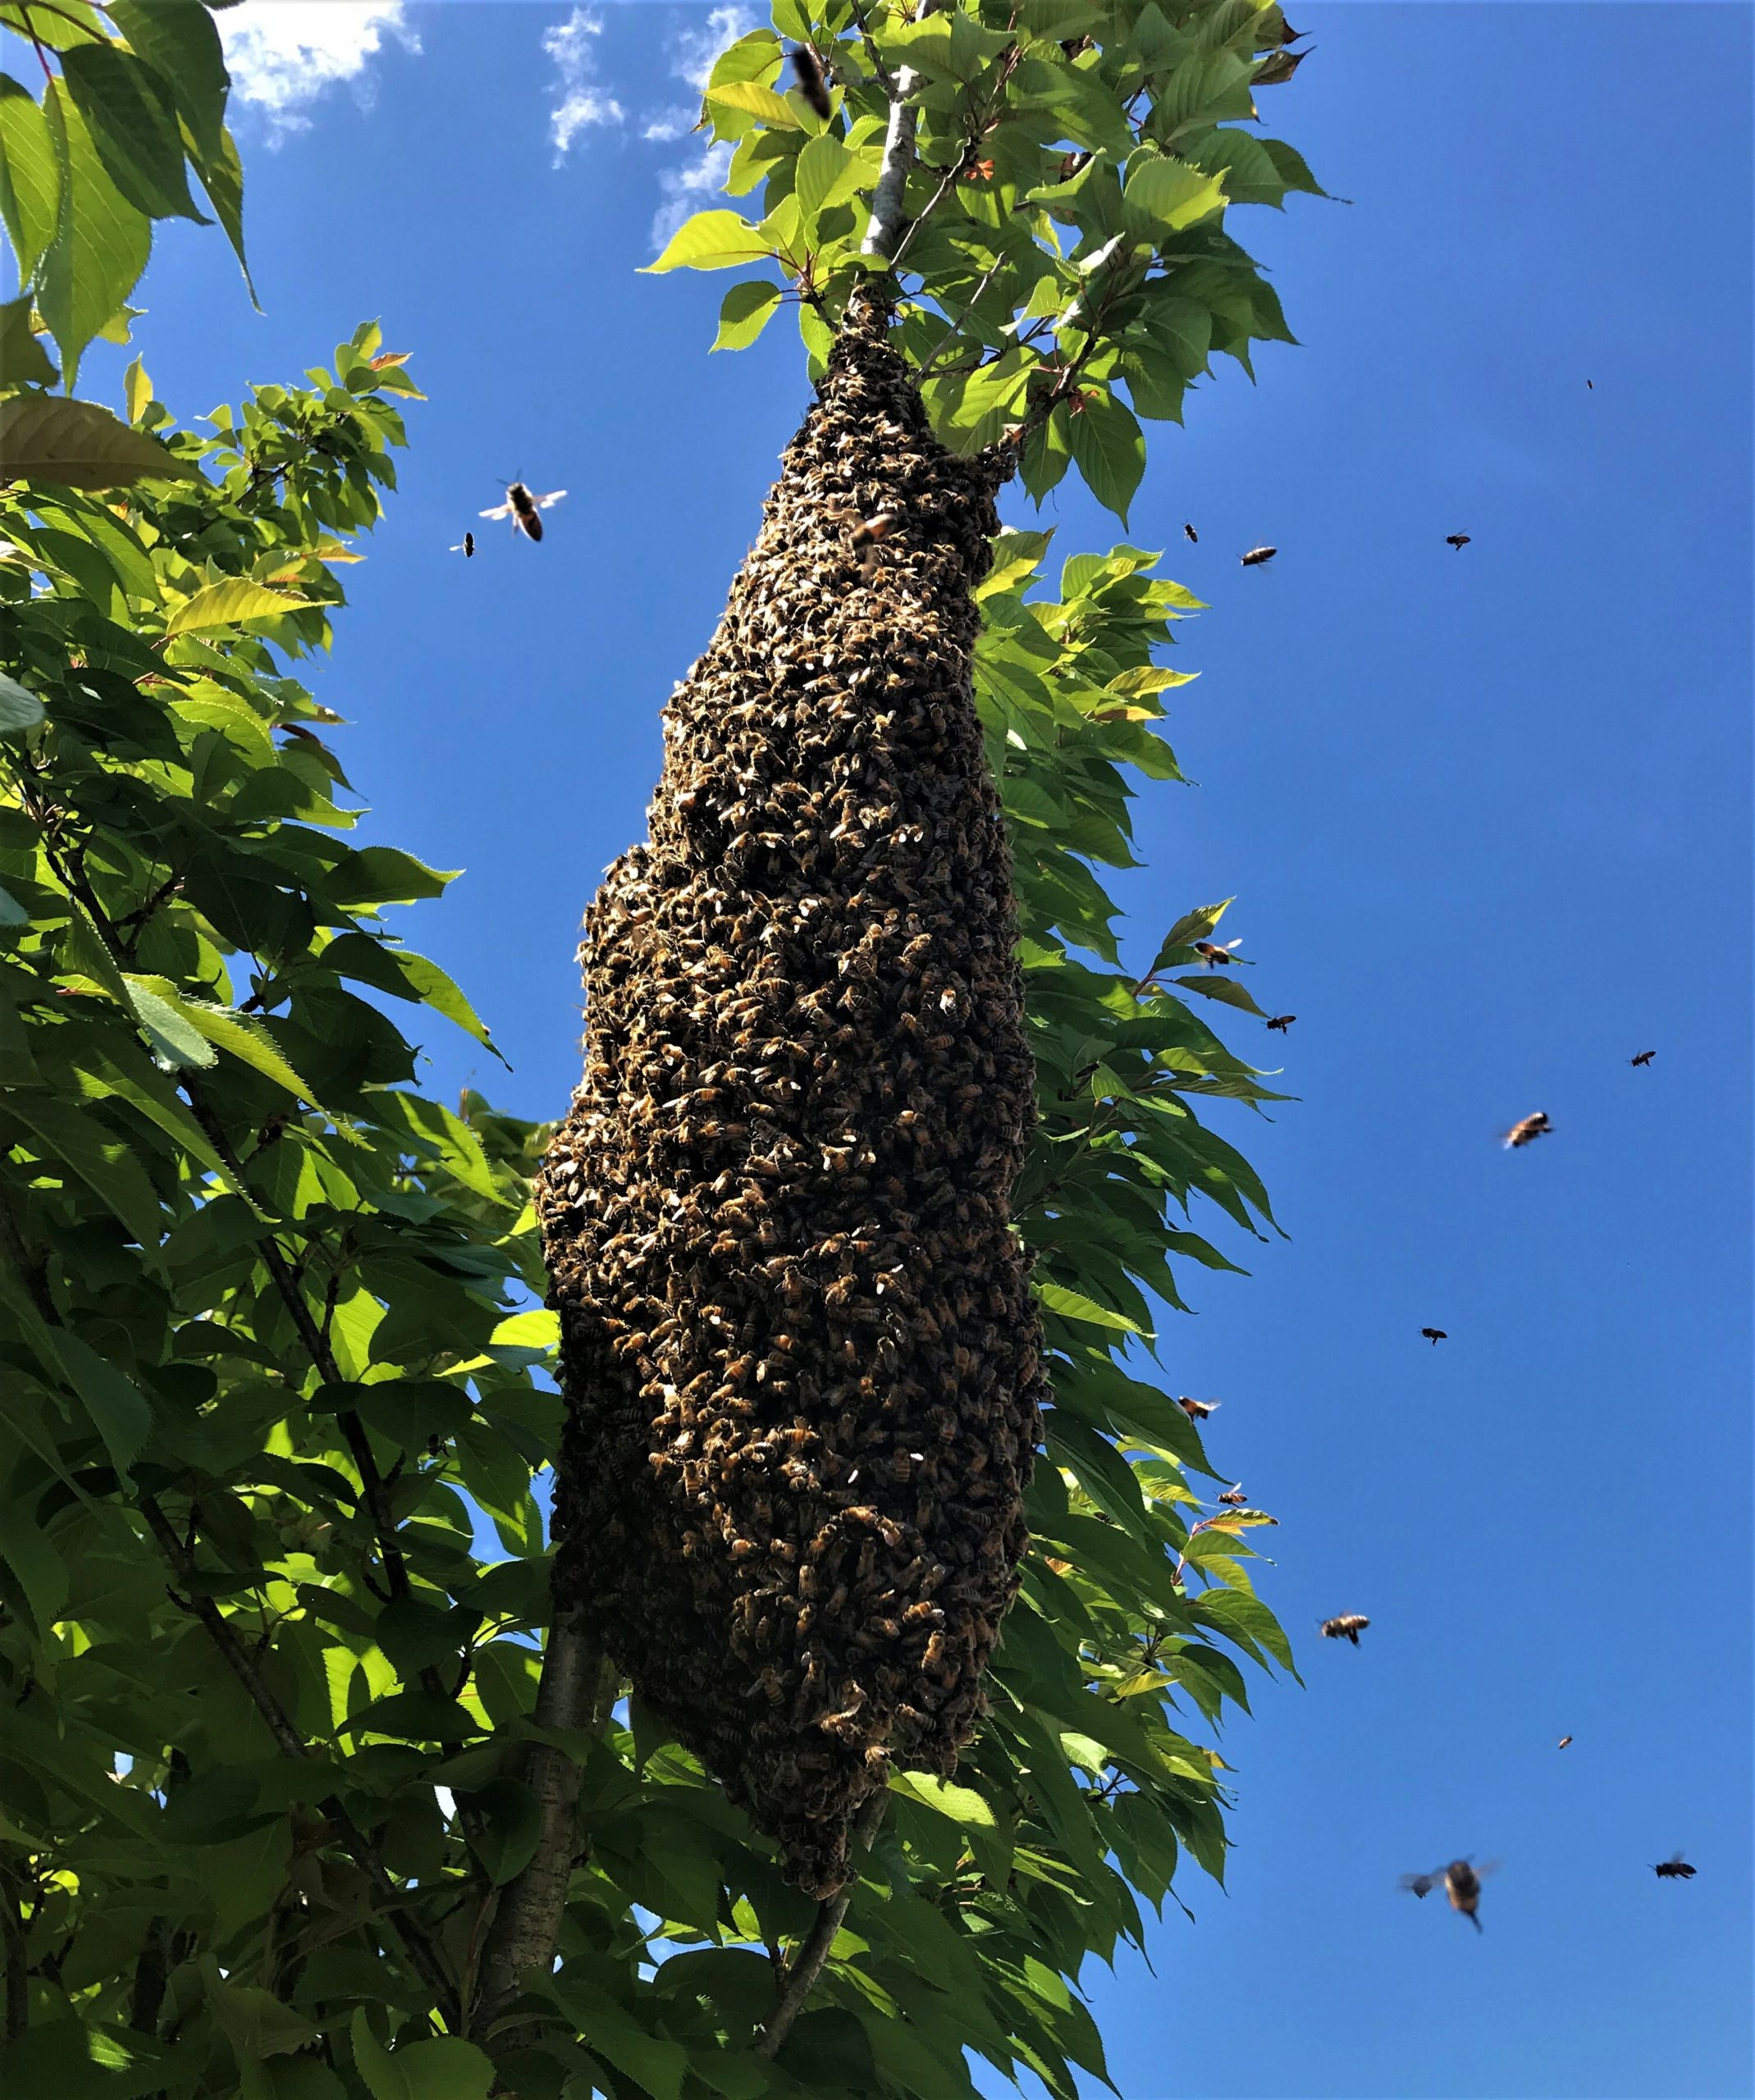 Honeybee swarm.